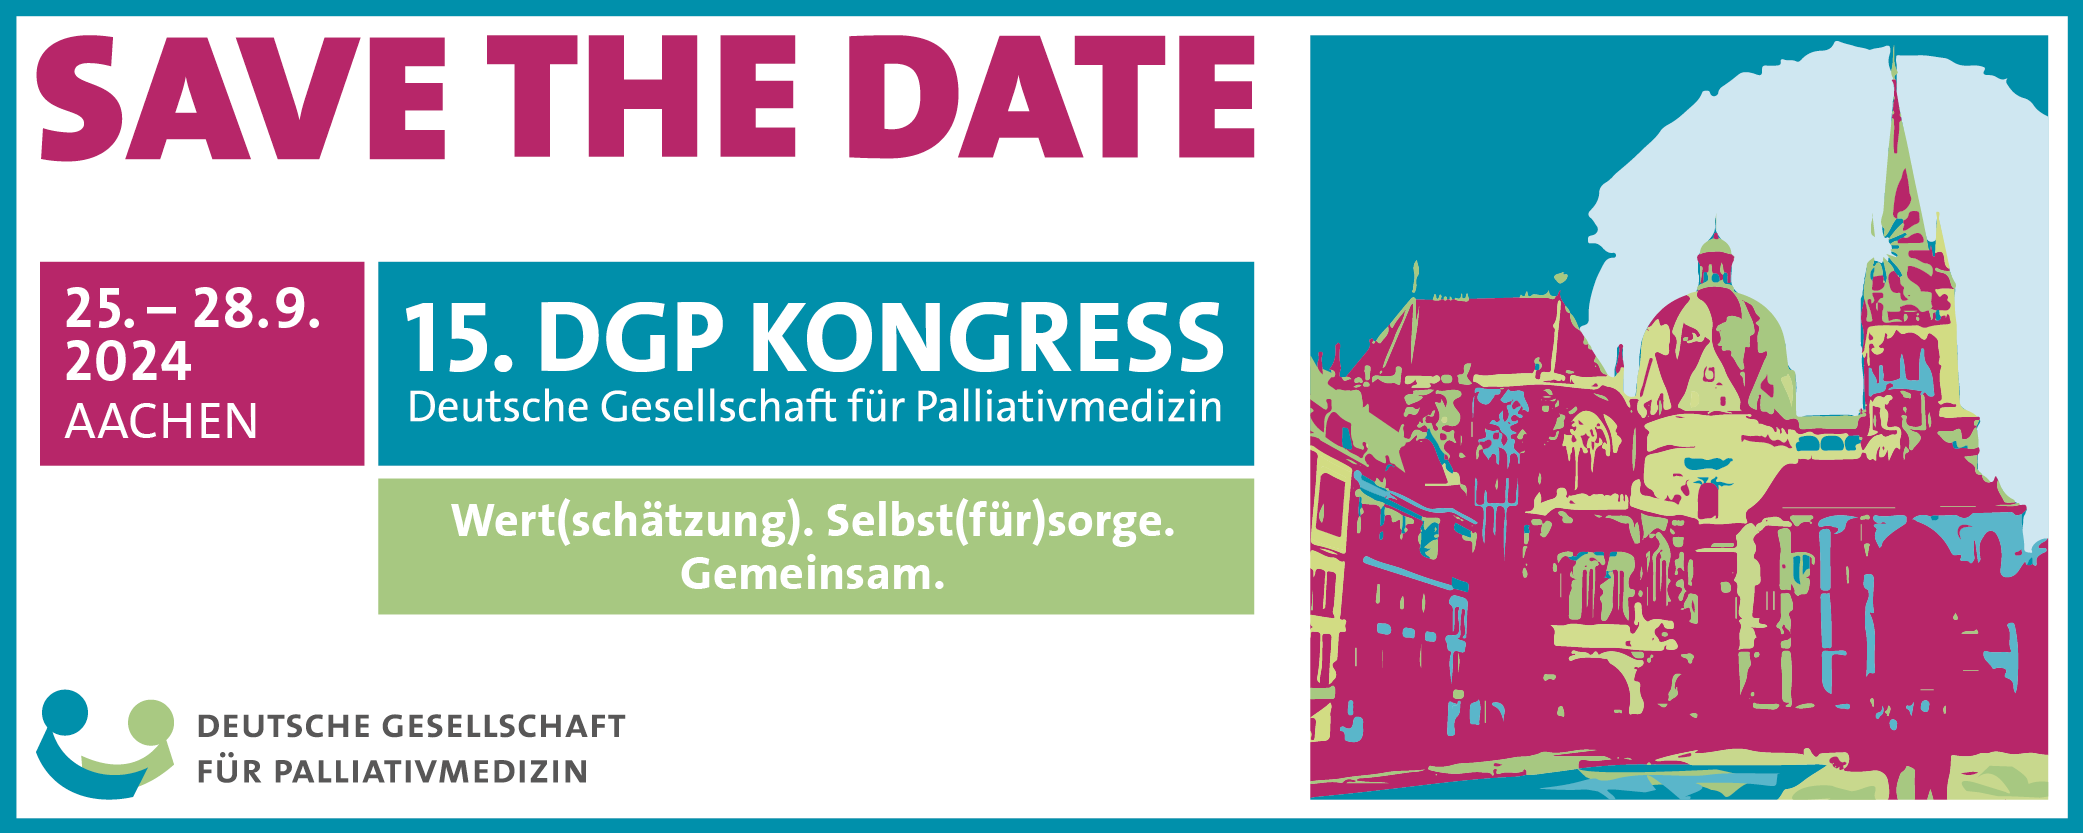 Save the Date 15. DGP Kongress in Aachen